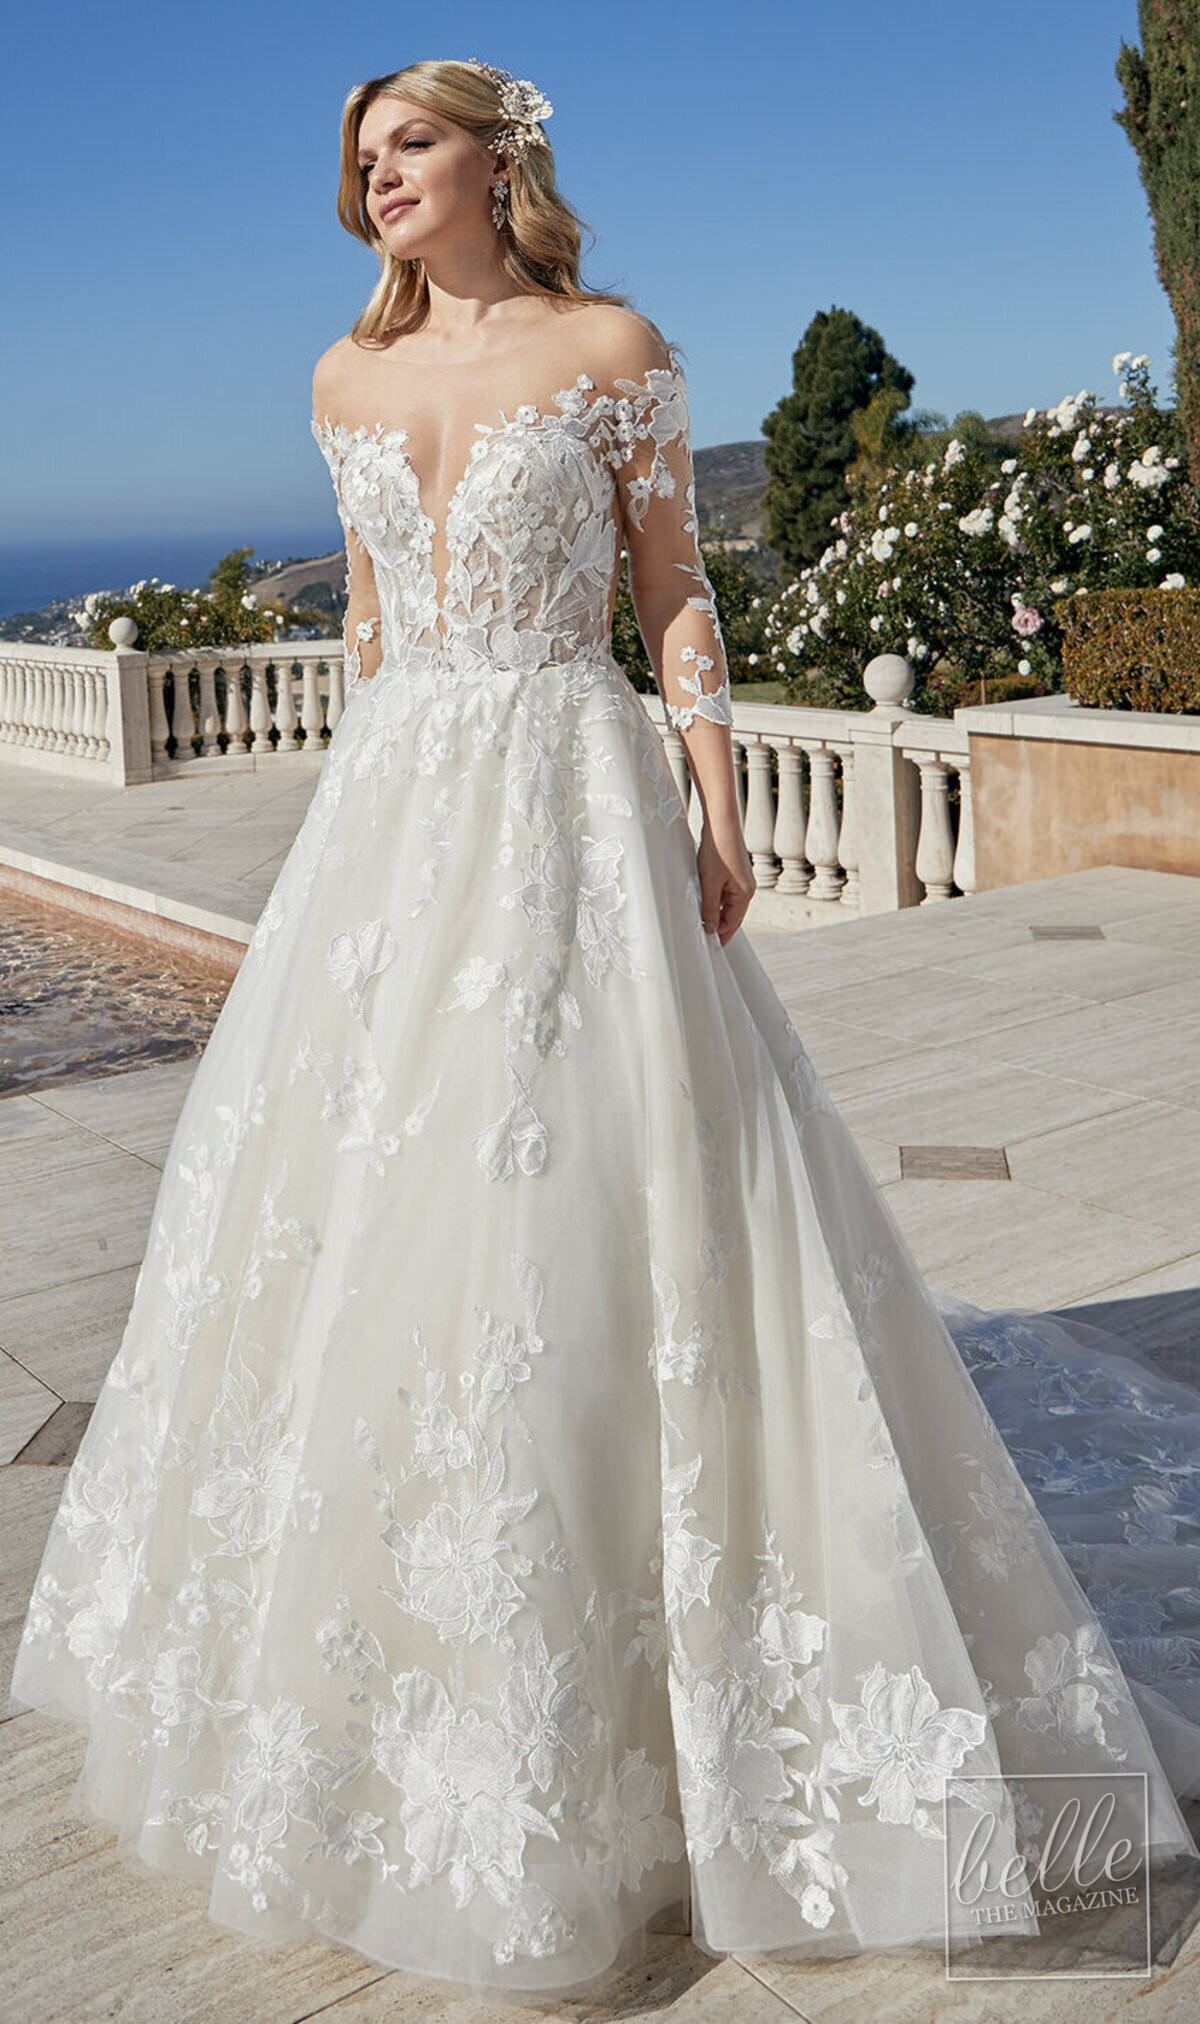 Wedding dress trends 2021 - Minimalist gown - CASABLANCA BRIDAL 2459 Sasha